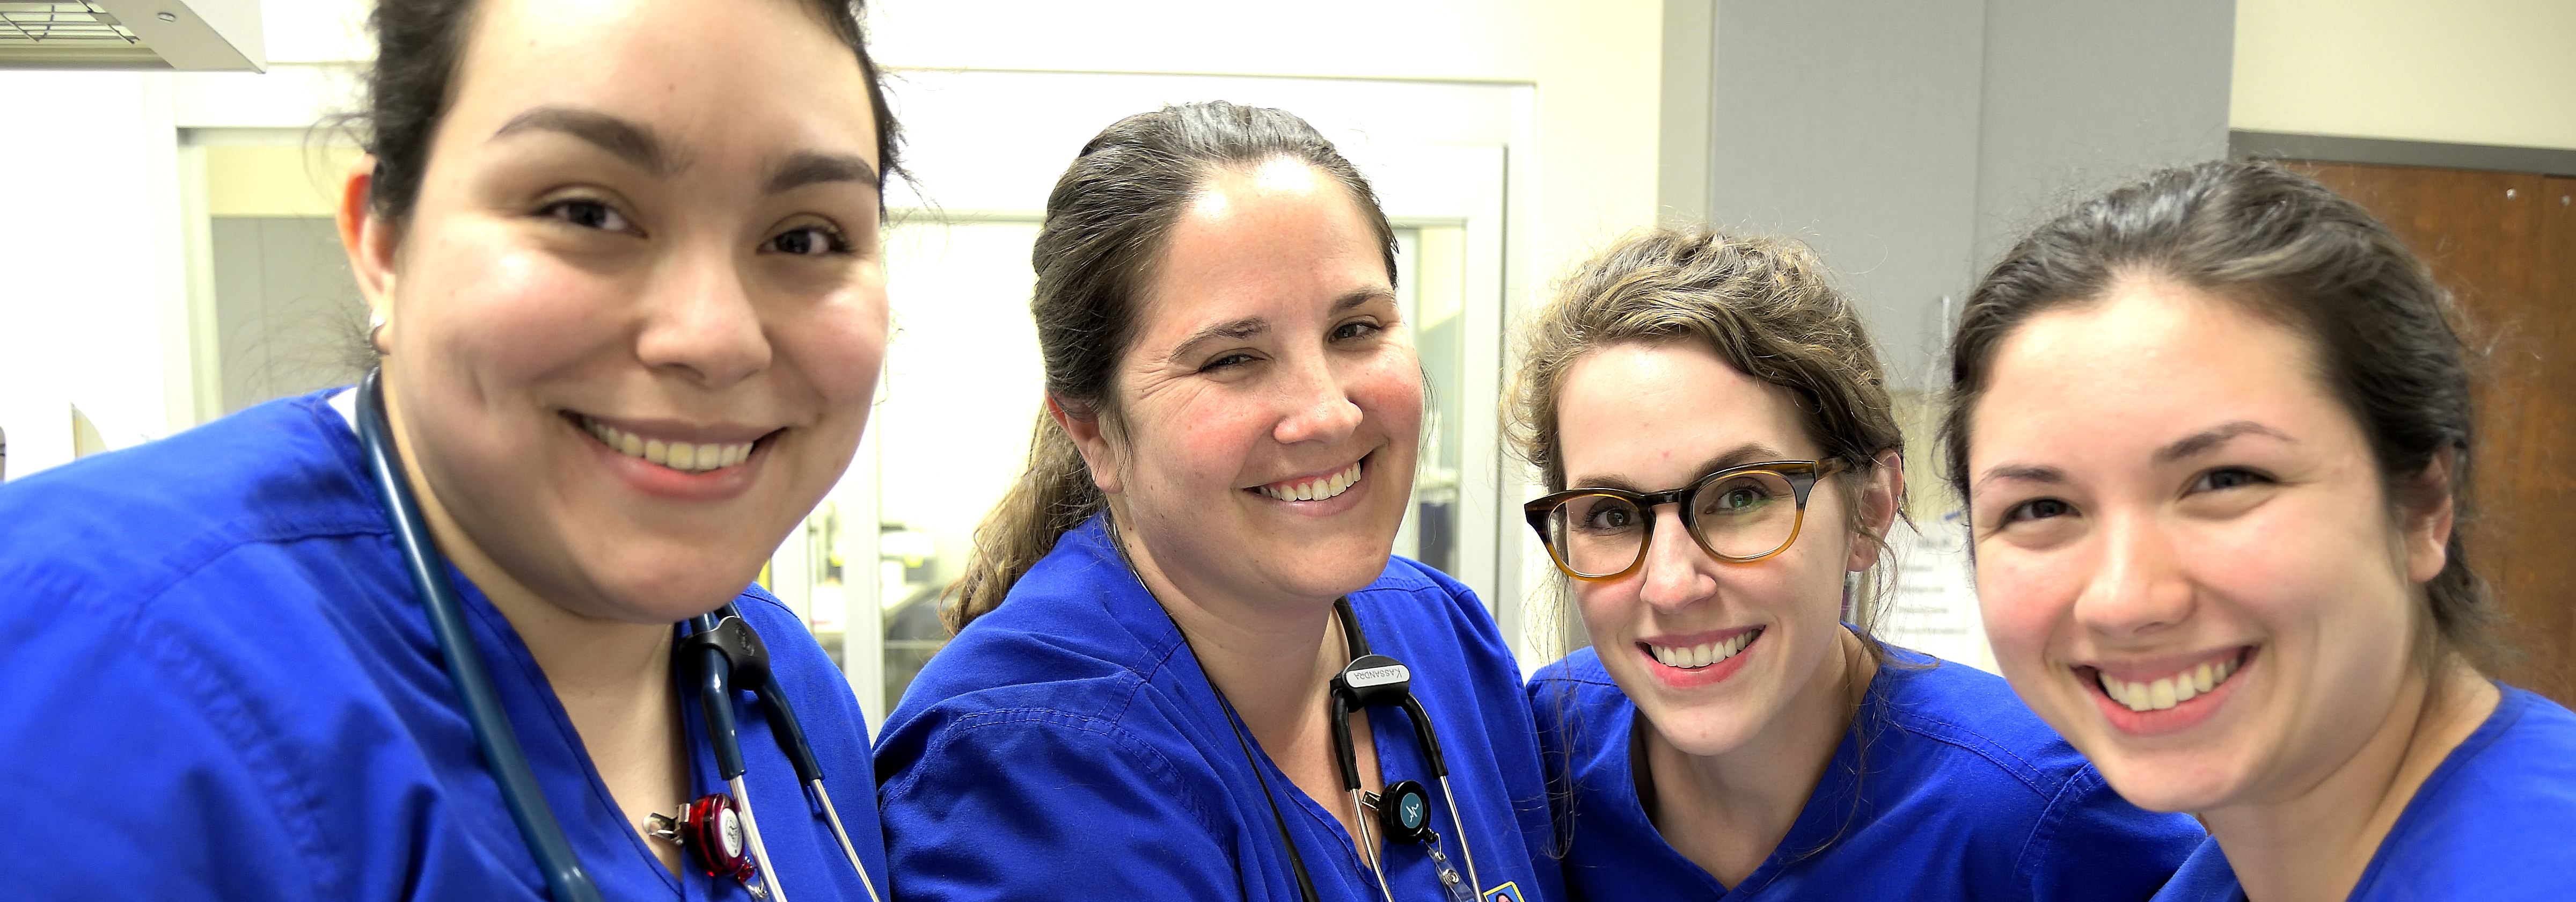 four smiling nursing students